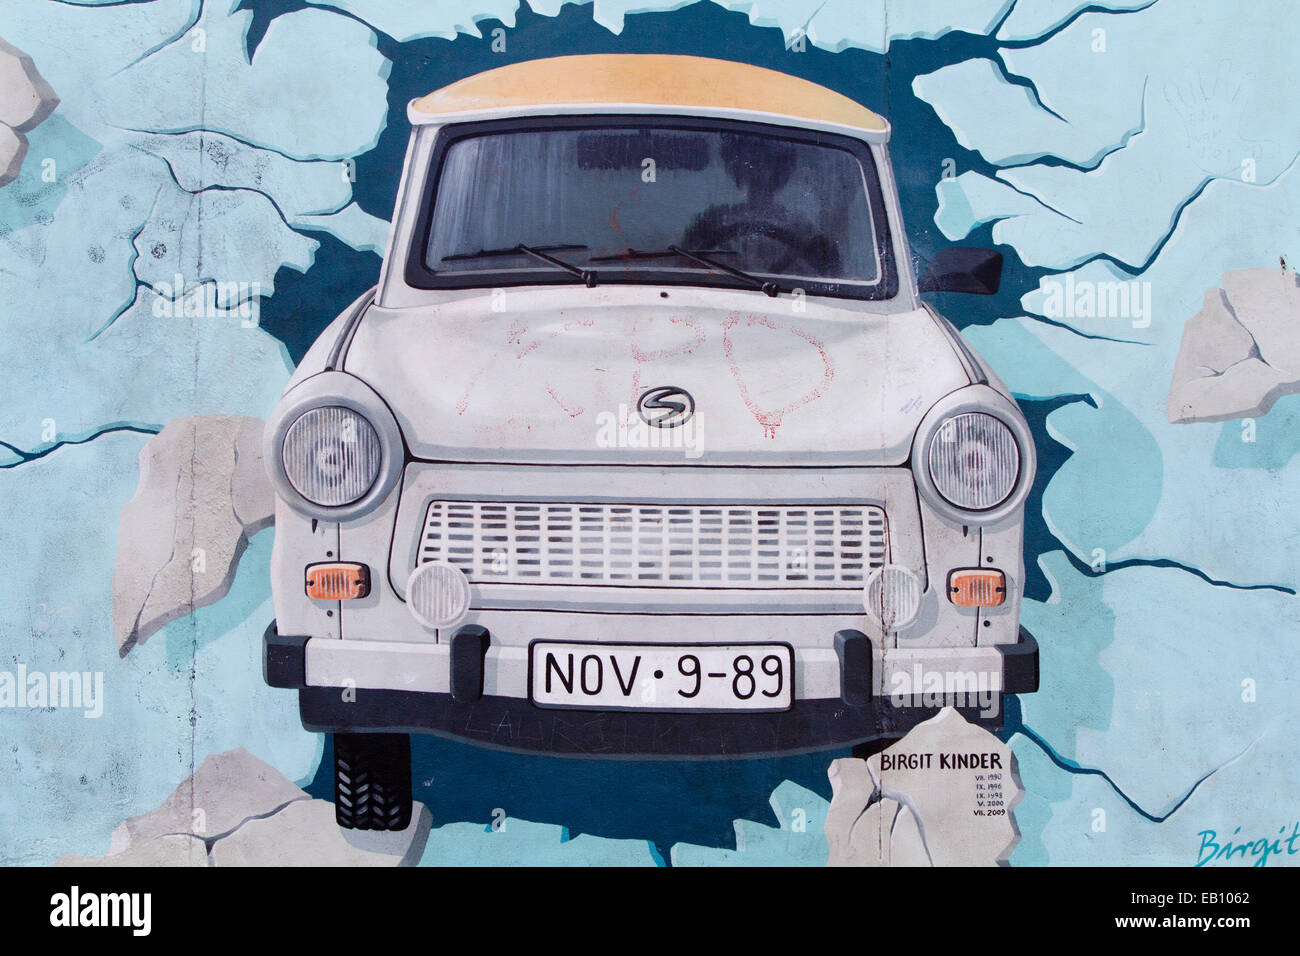 East German Trabant Car Berlin wall Street Art Icon Stock Photo